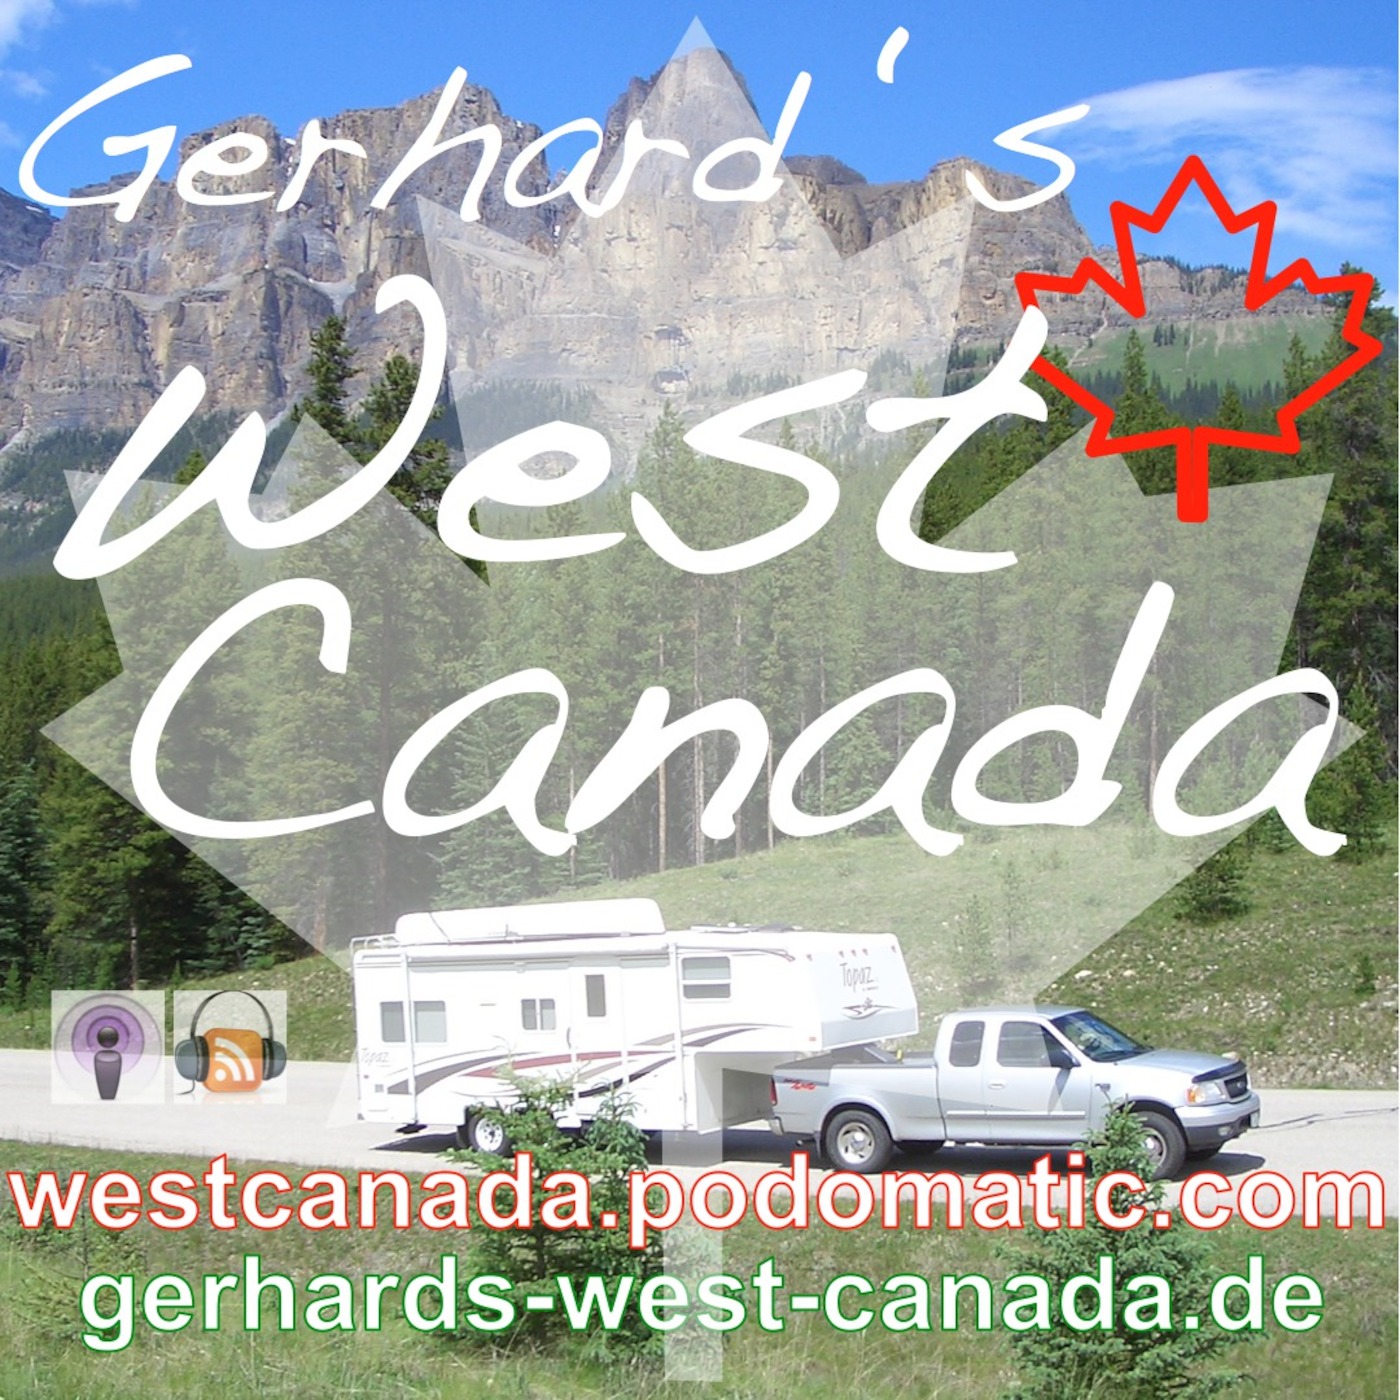 Gerhard's West Canada - Podcast